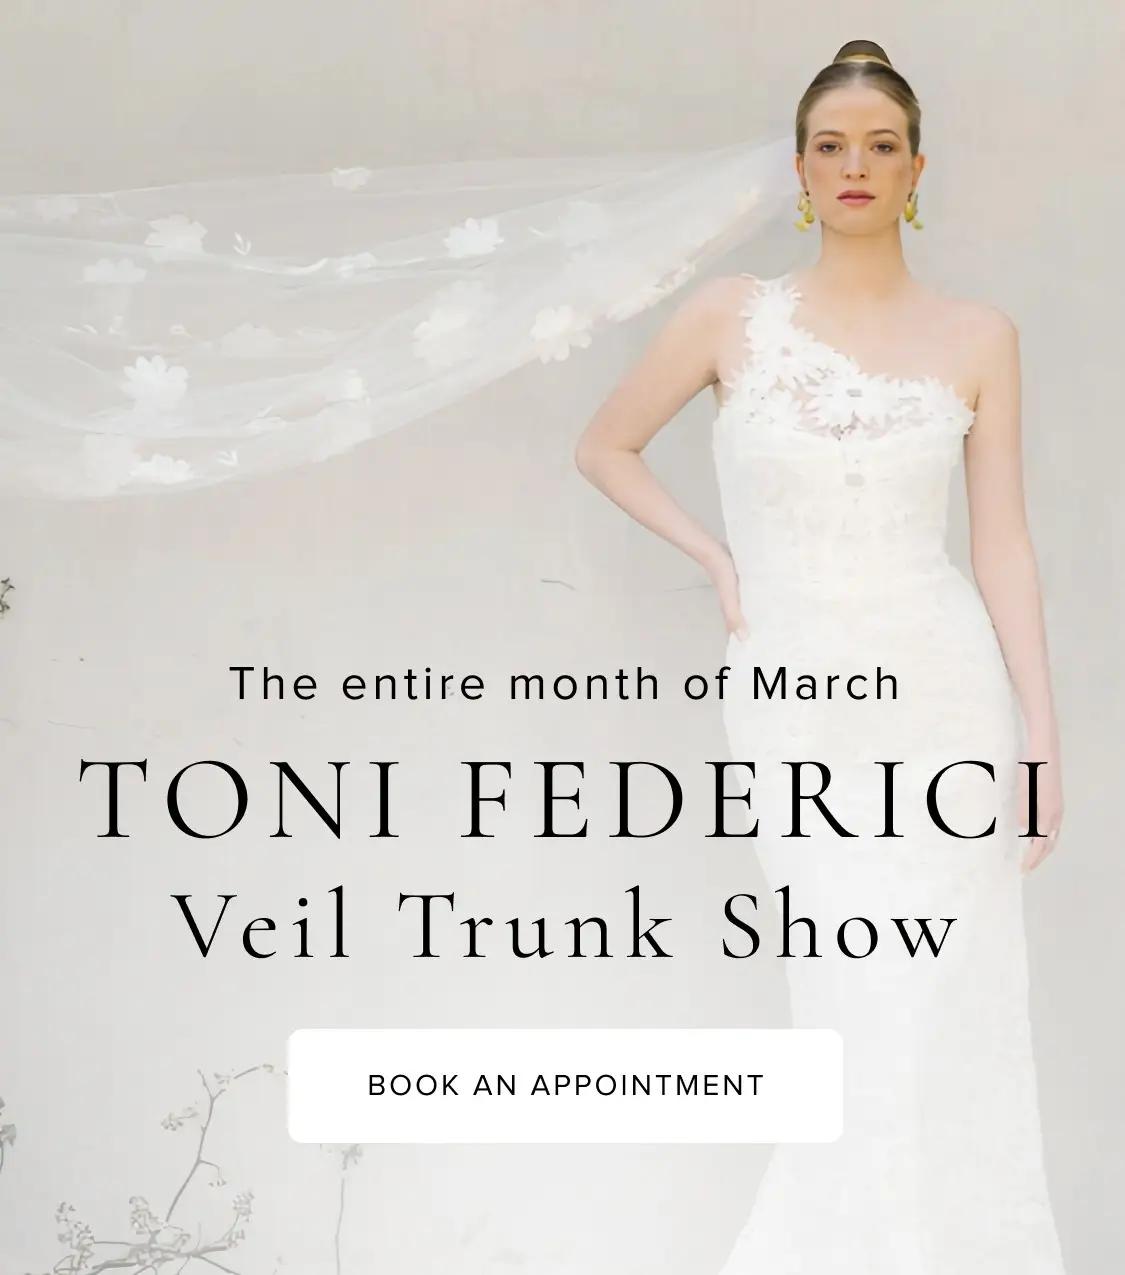 Toni Federici Veil Trunk Show Banner Mobile